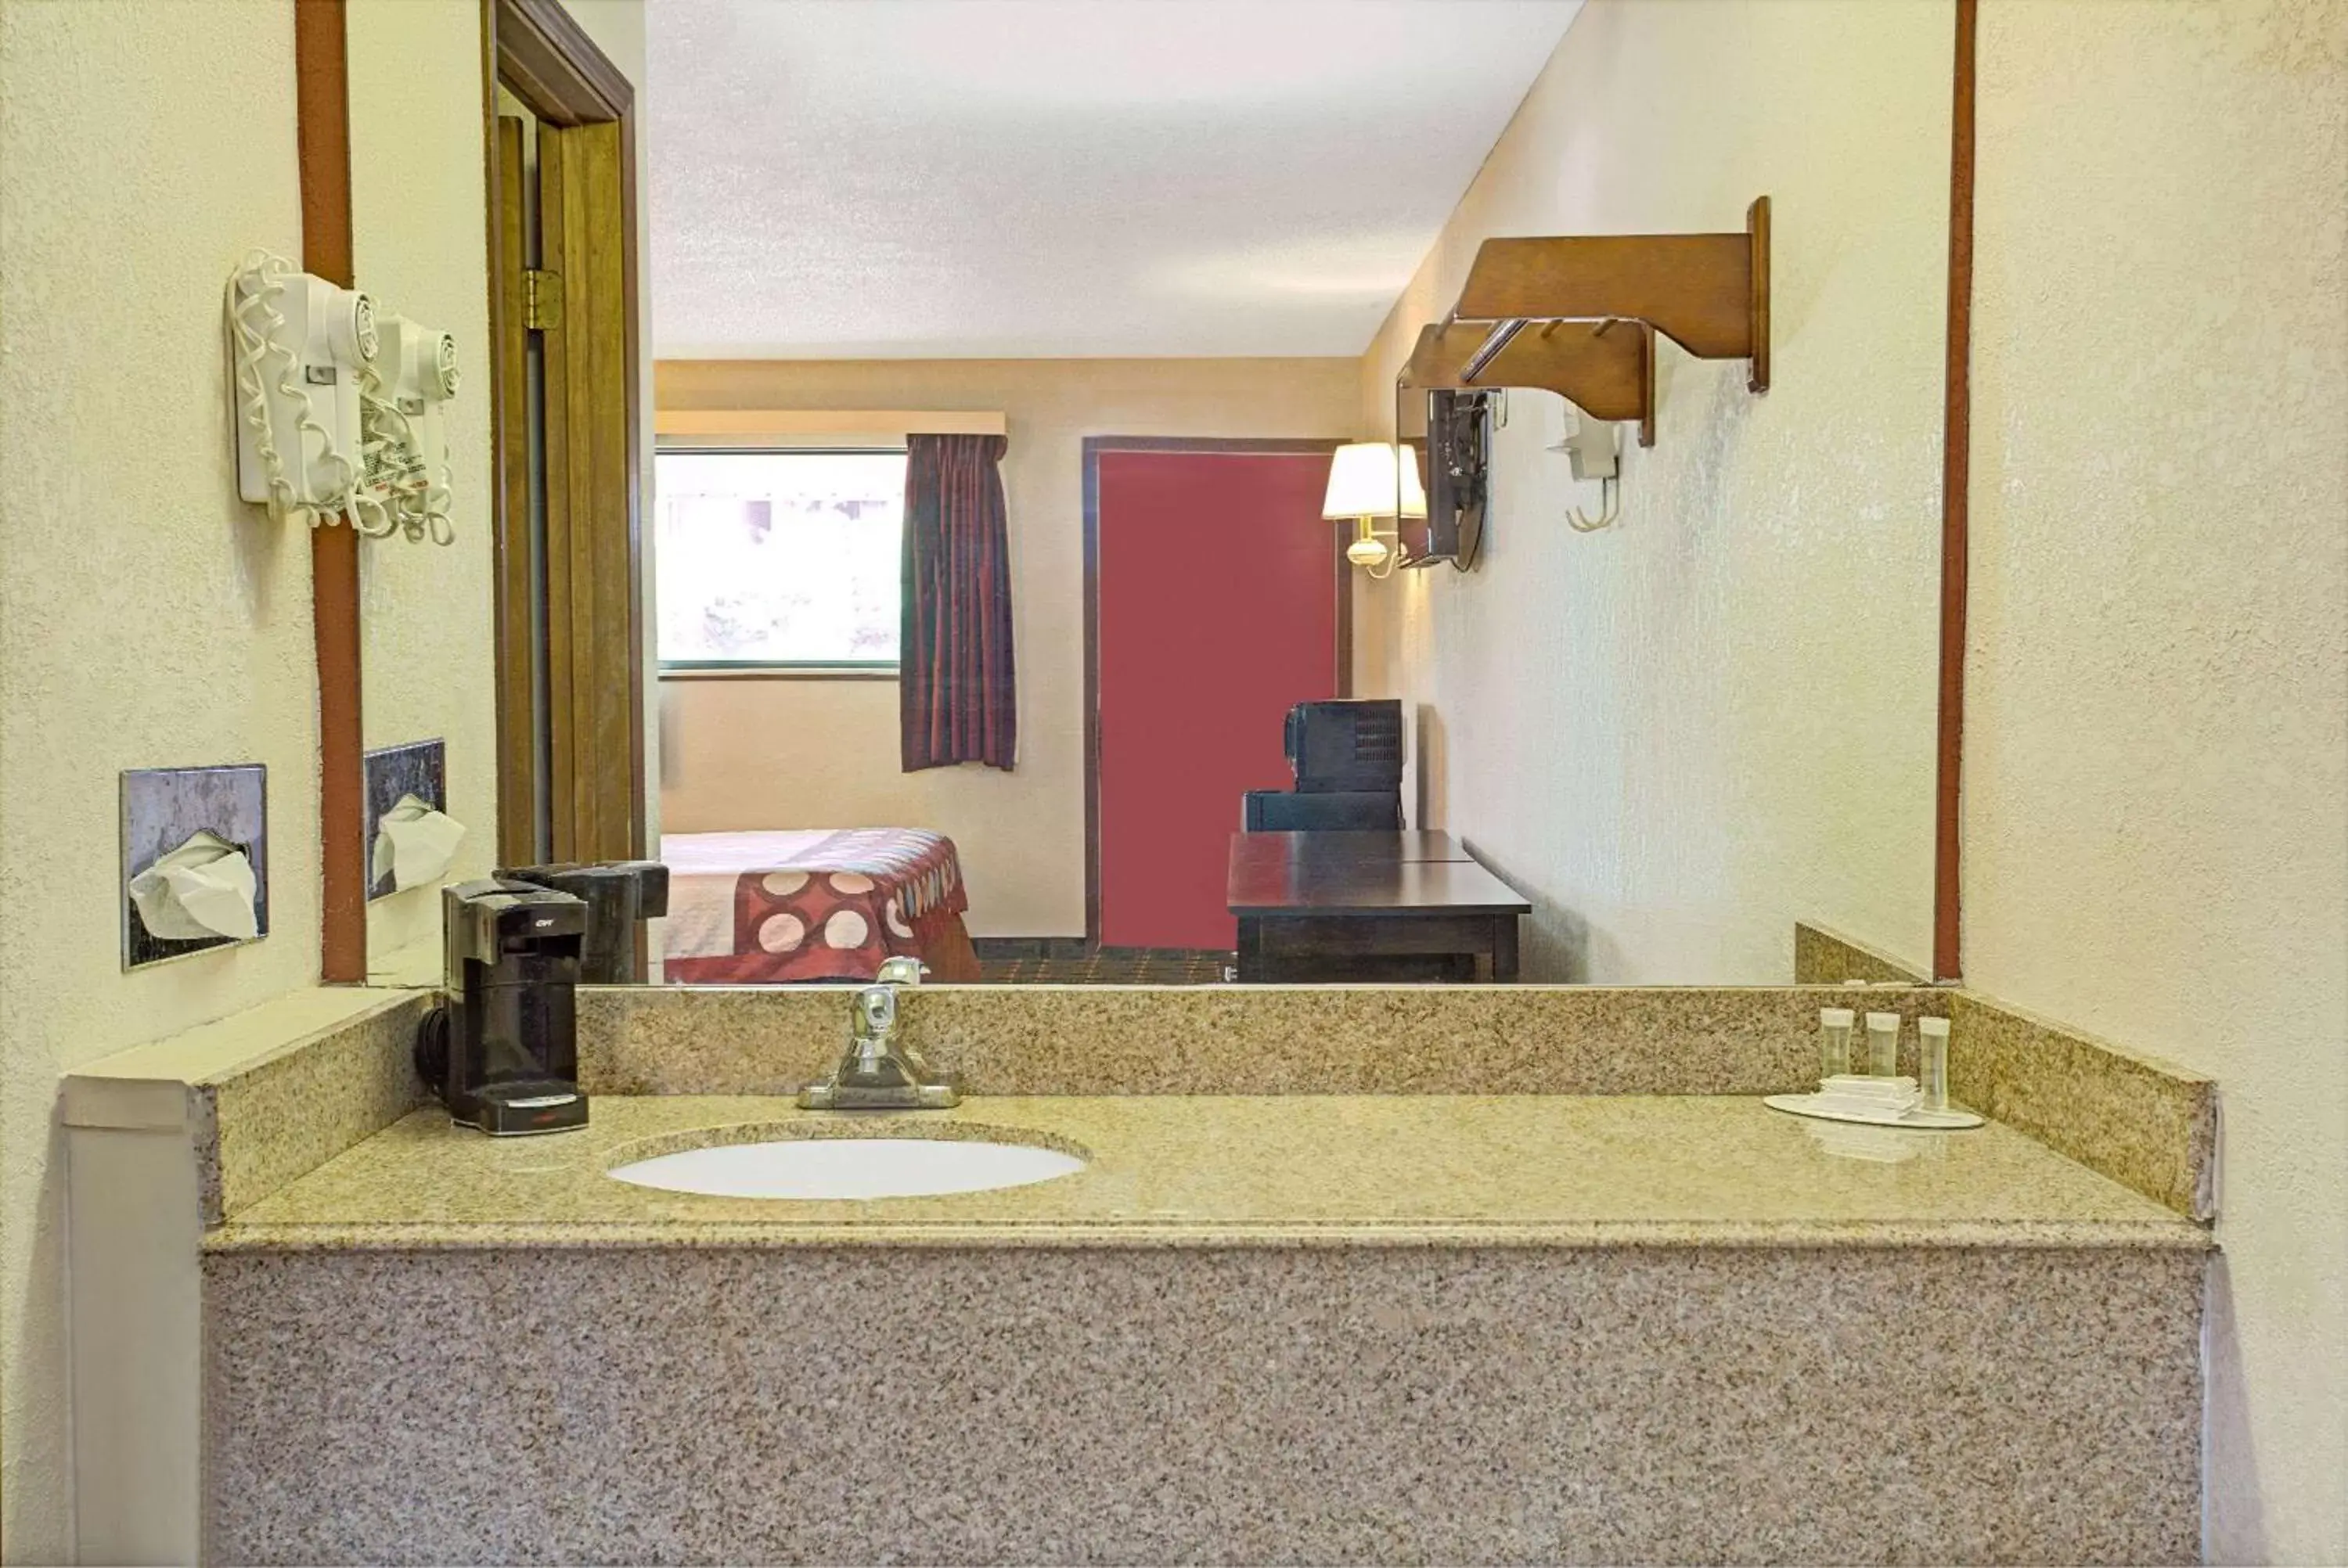 Photo of the whole room, Bathroom in Super 8 by Wyndham Cincinnati-Springdale OH